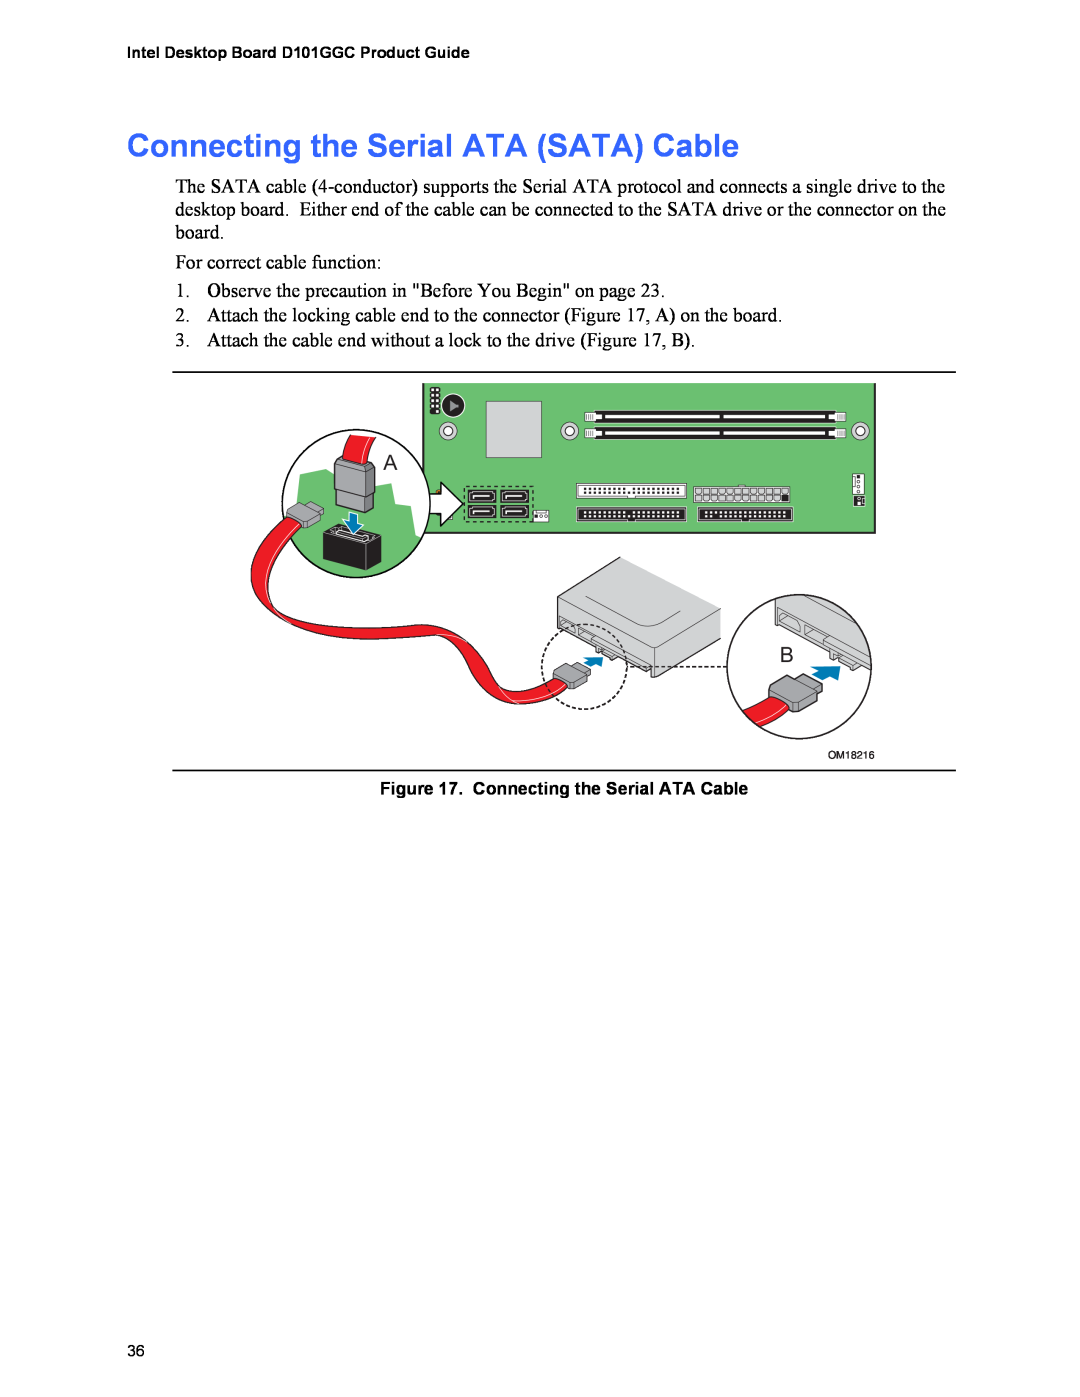 Intel D101GGC manual Connecting the Serial ATA SATA Cable 